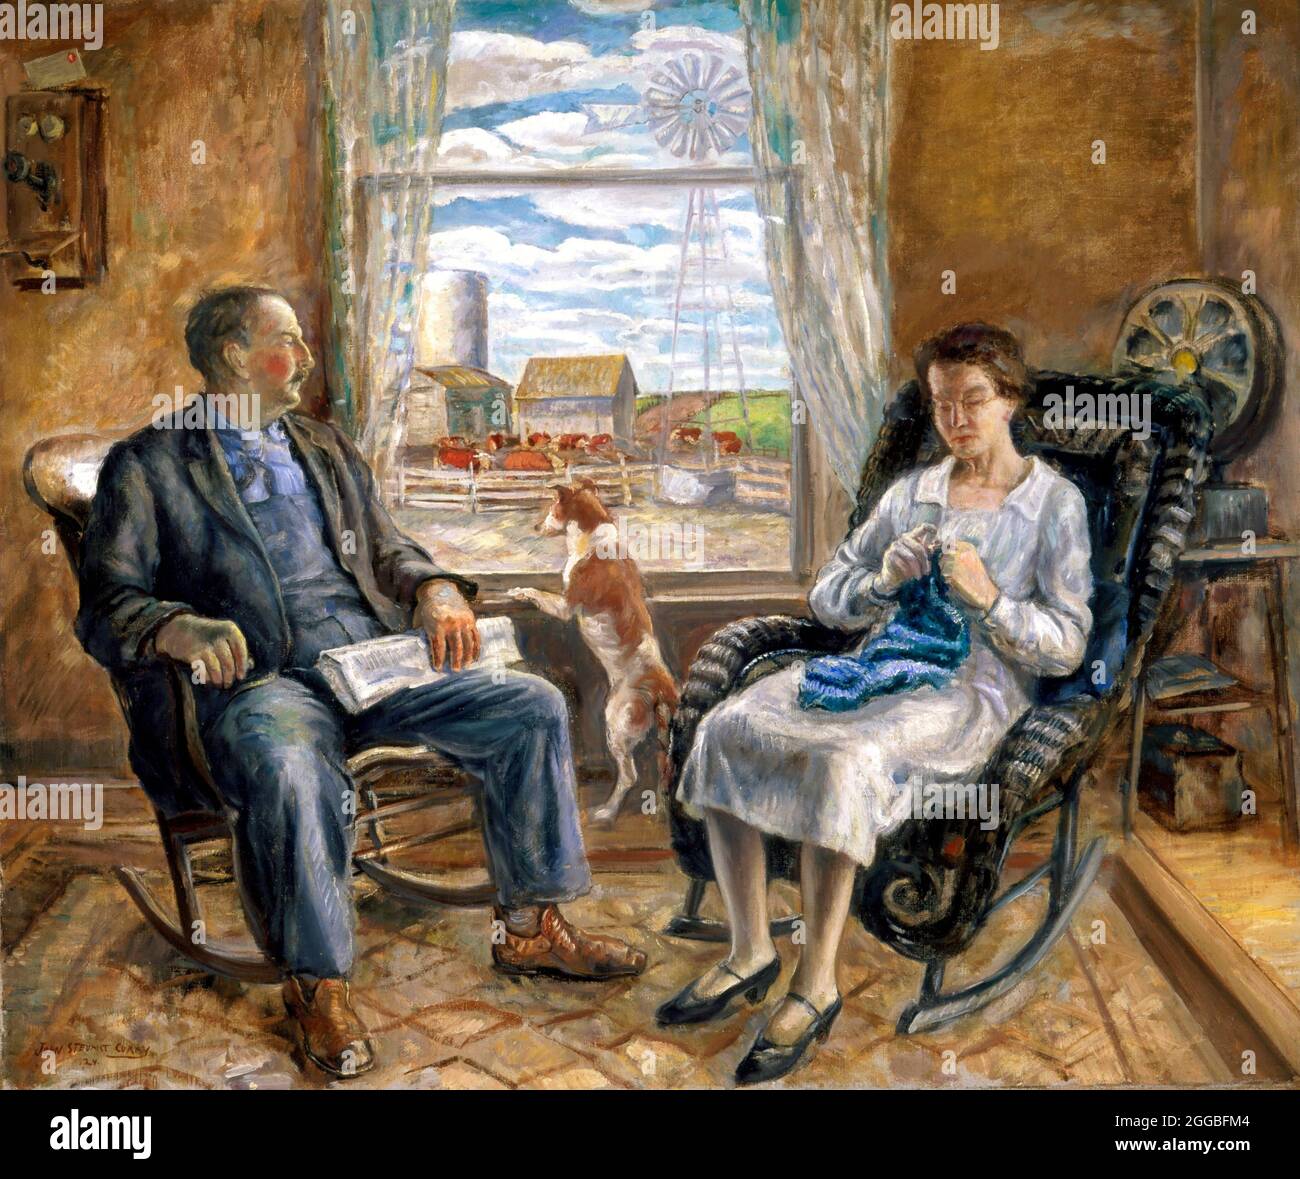 Los viejos Folks (Madre y Padre) por John Steuart Curry (1897-1946), óleo sobre lienzo, 1929 Foto de stock